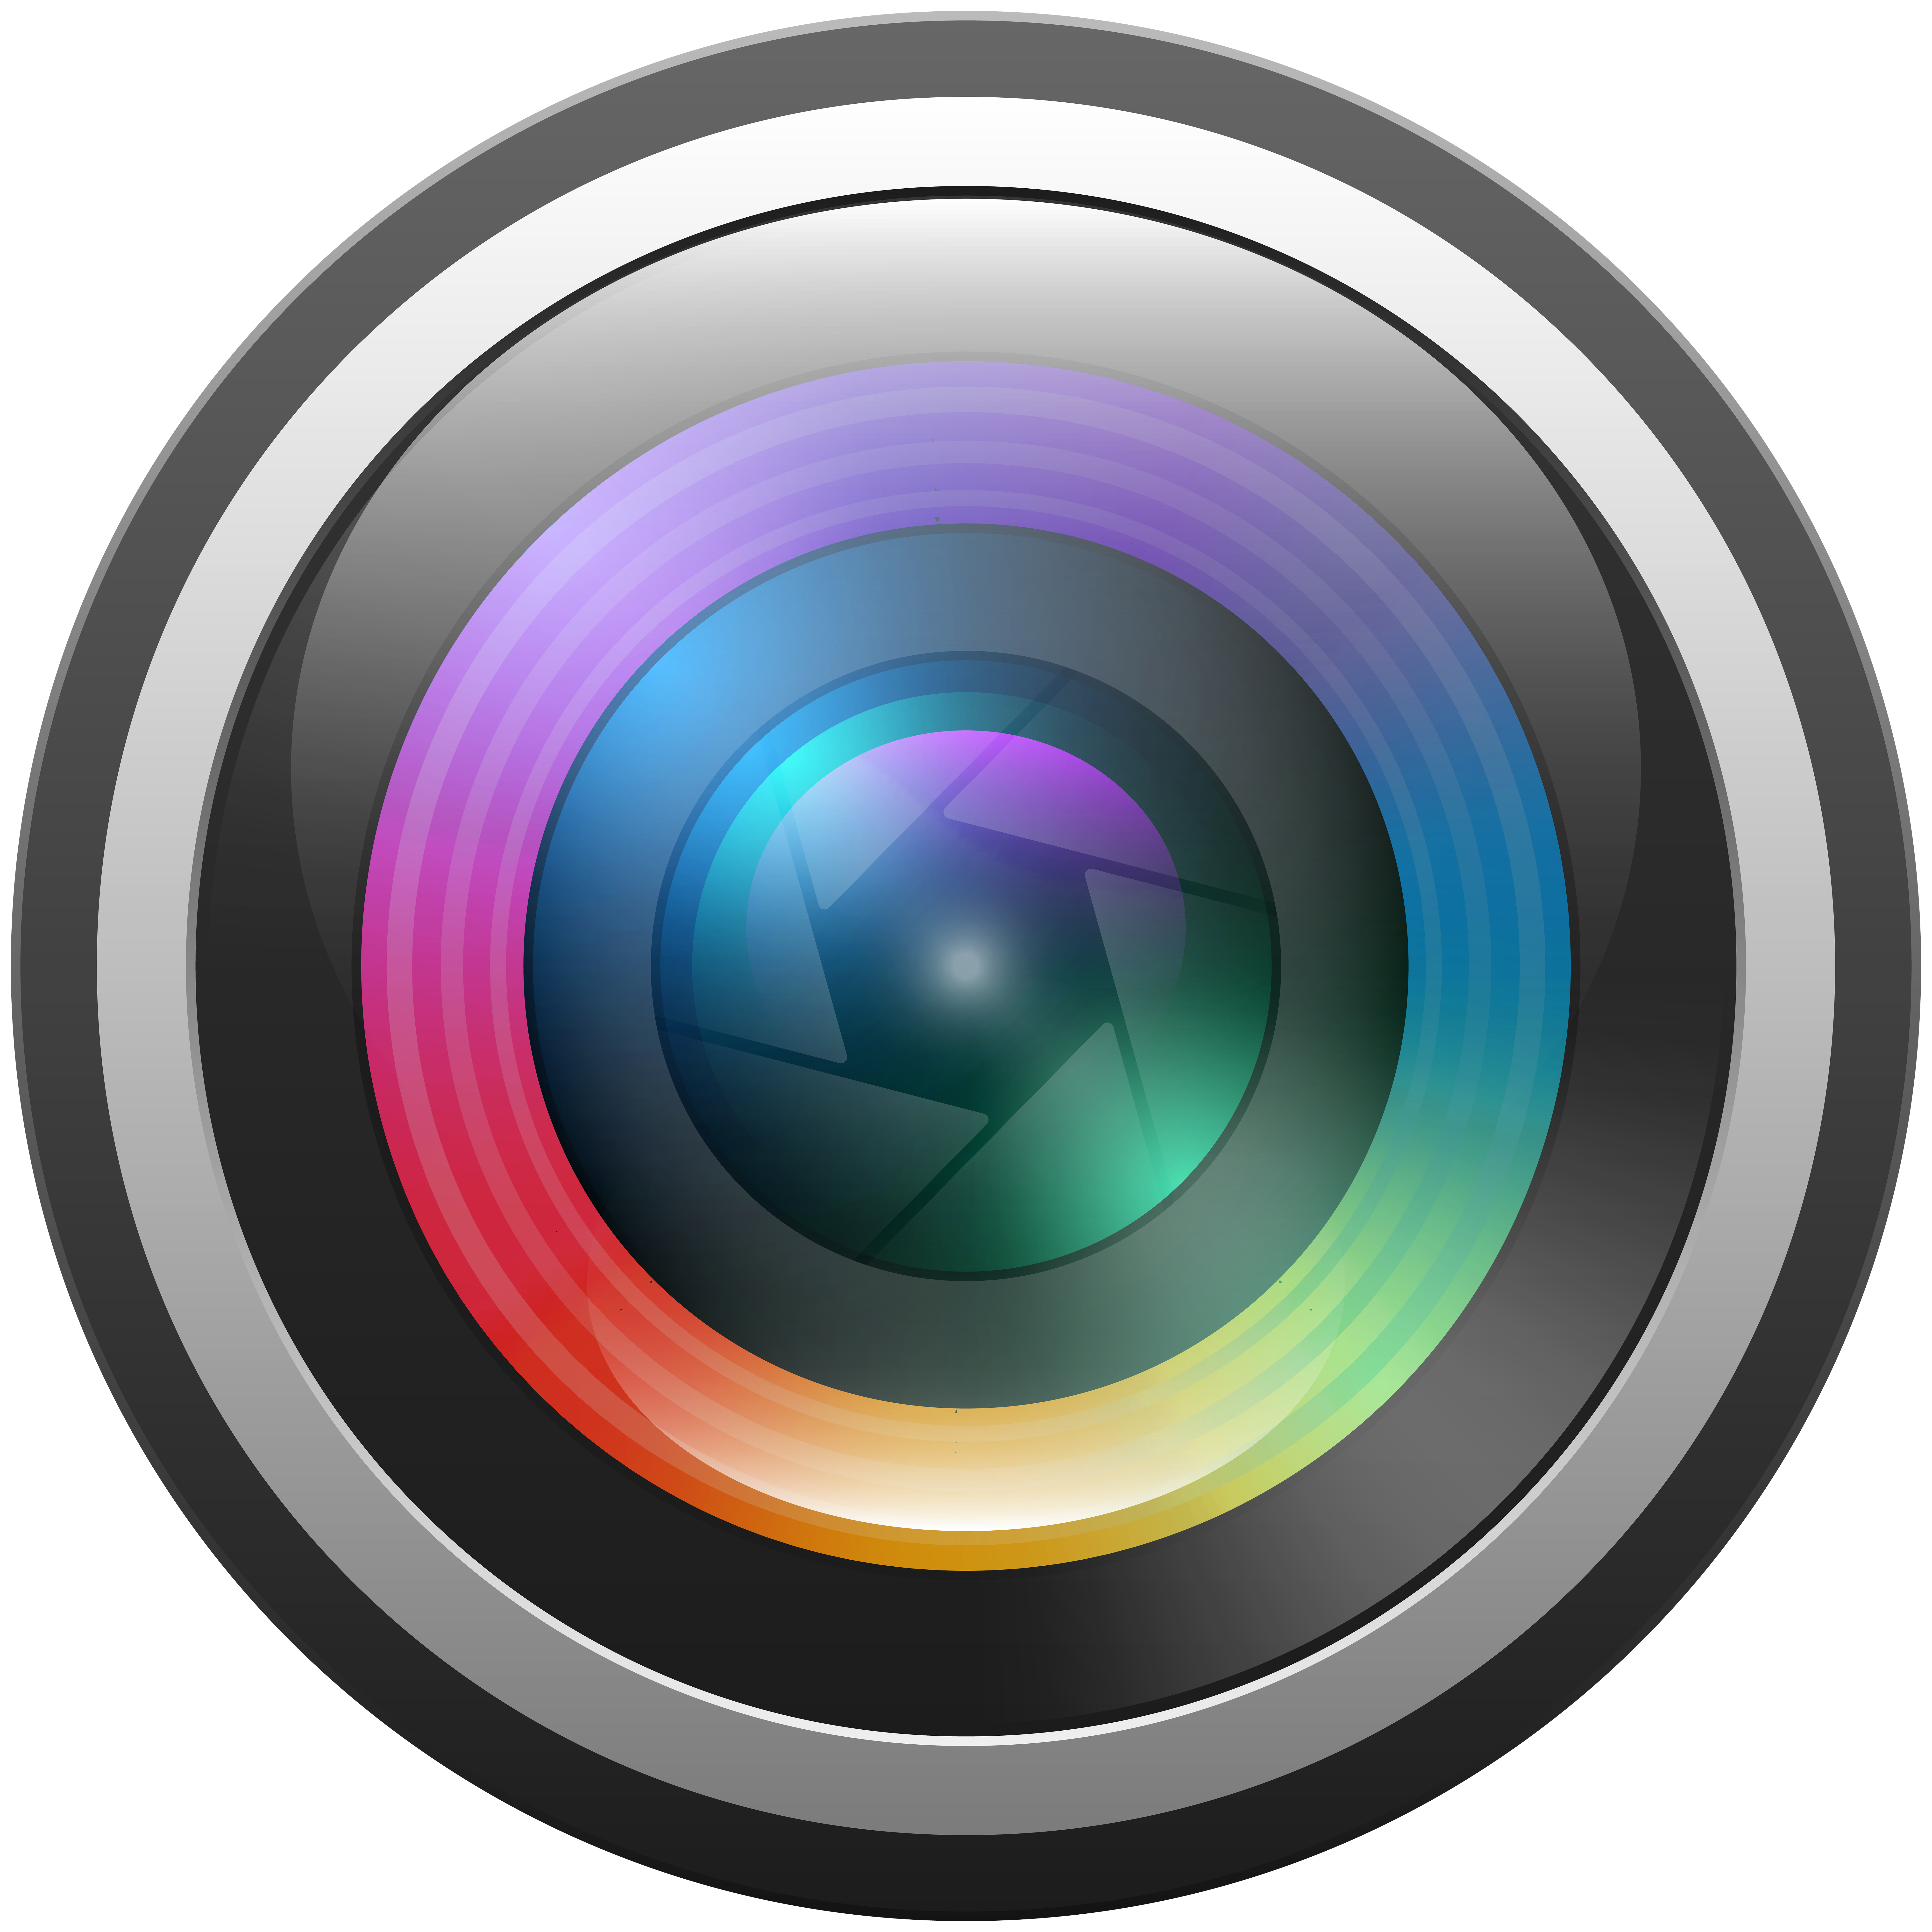 Lens decorative transparent image. Photography clipart colorful camera